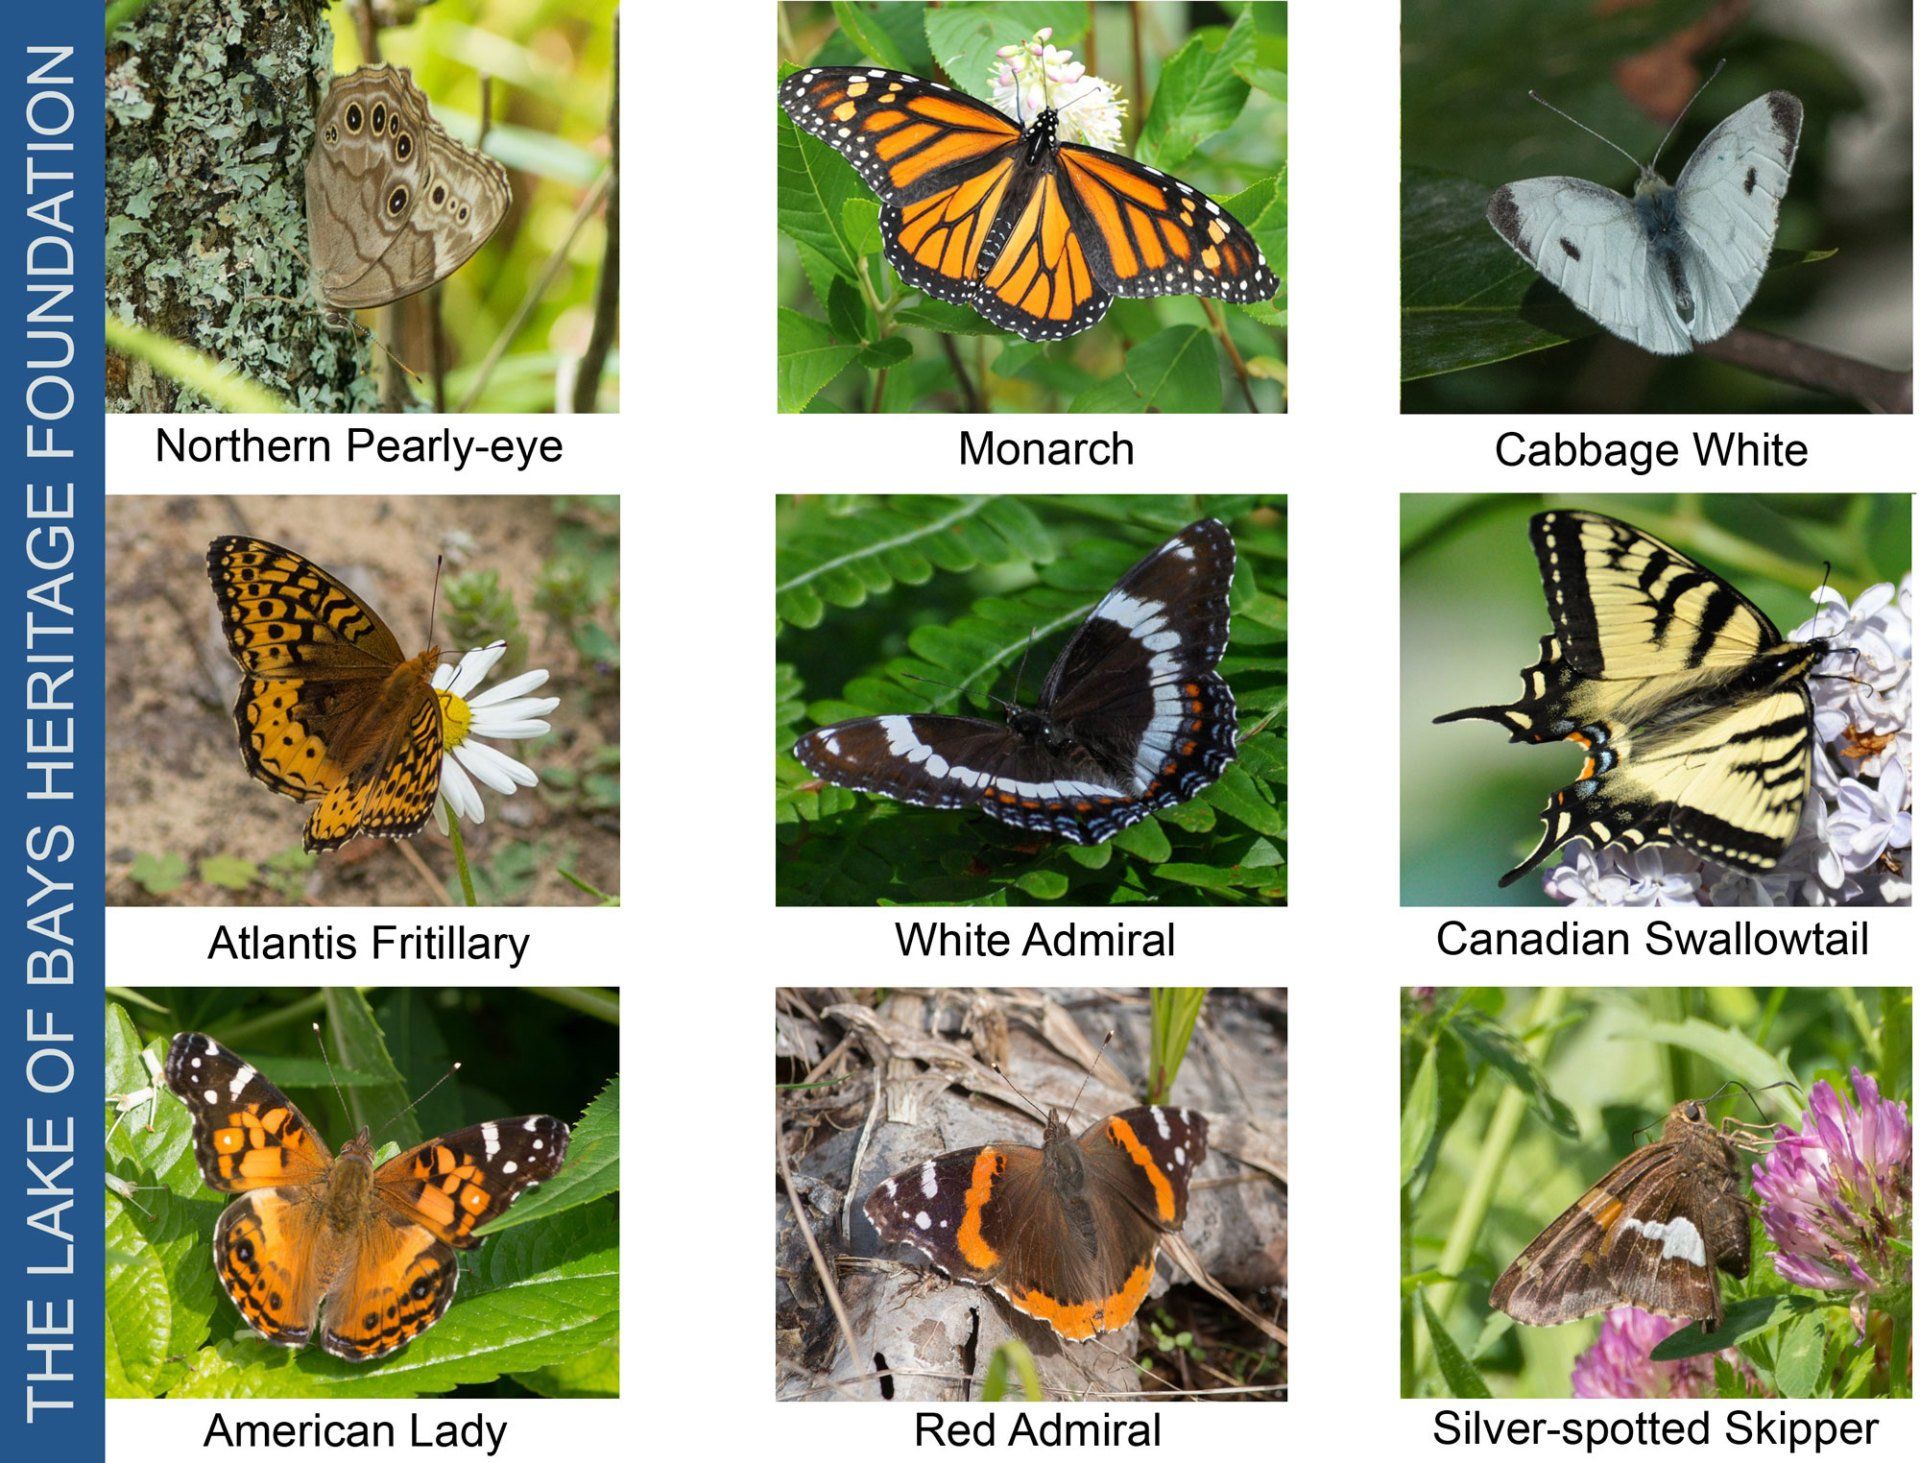 Identifying Butterflies, Damselflies and Dragonflies